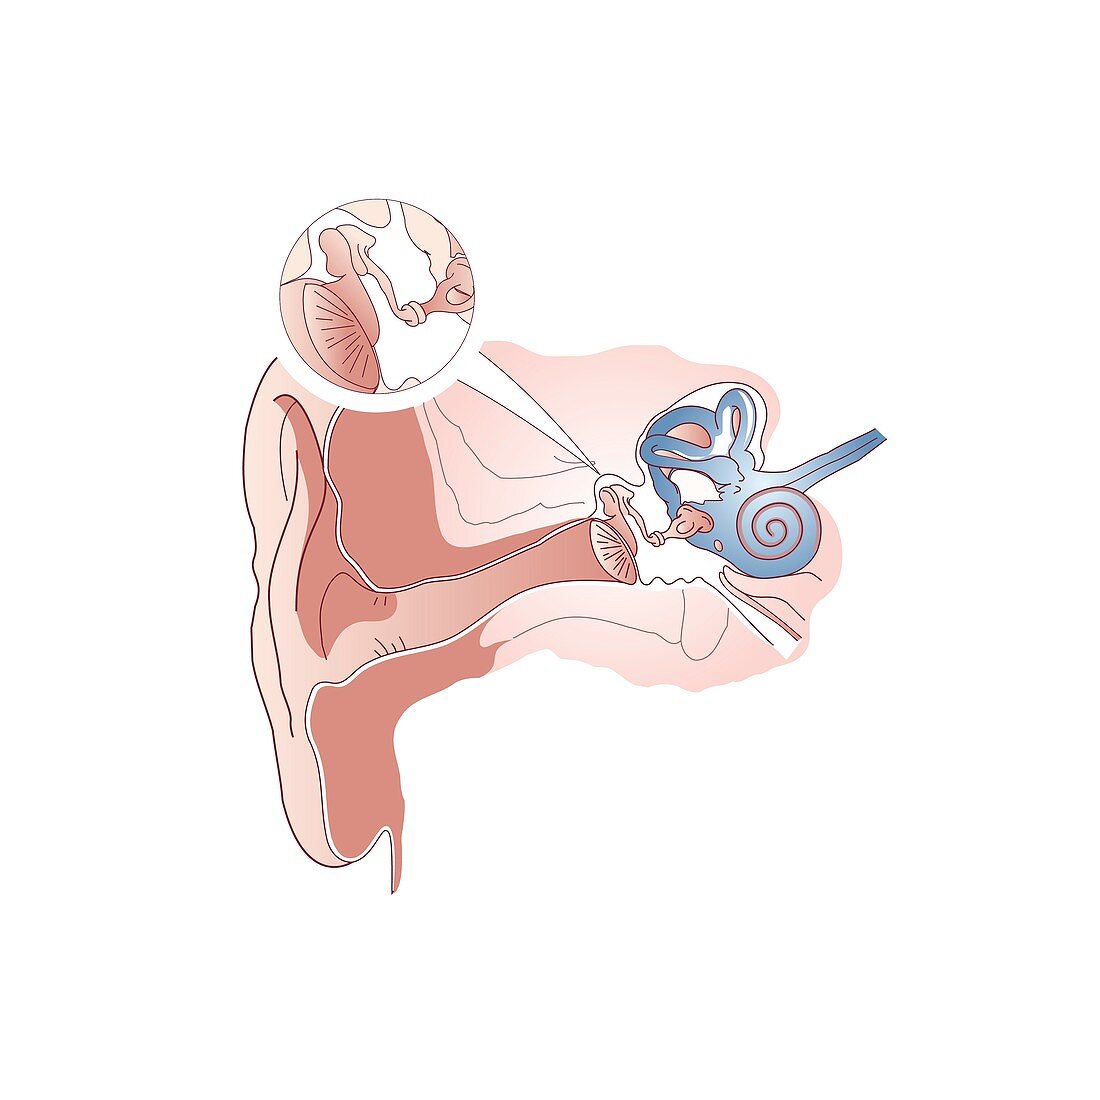 Anatomy of the human ear, illustration